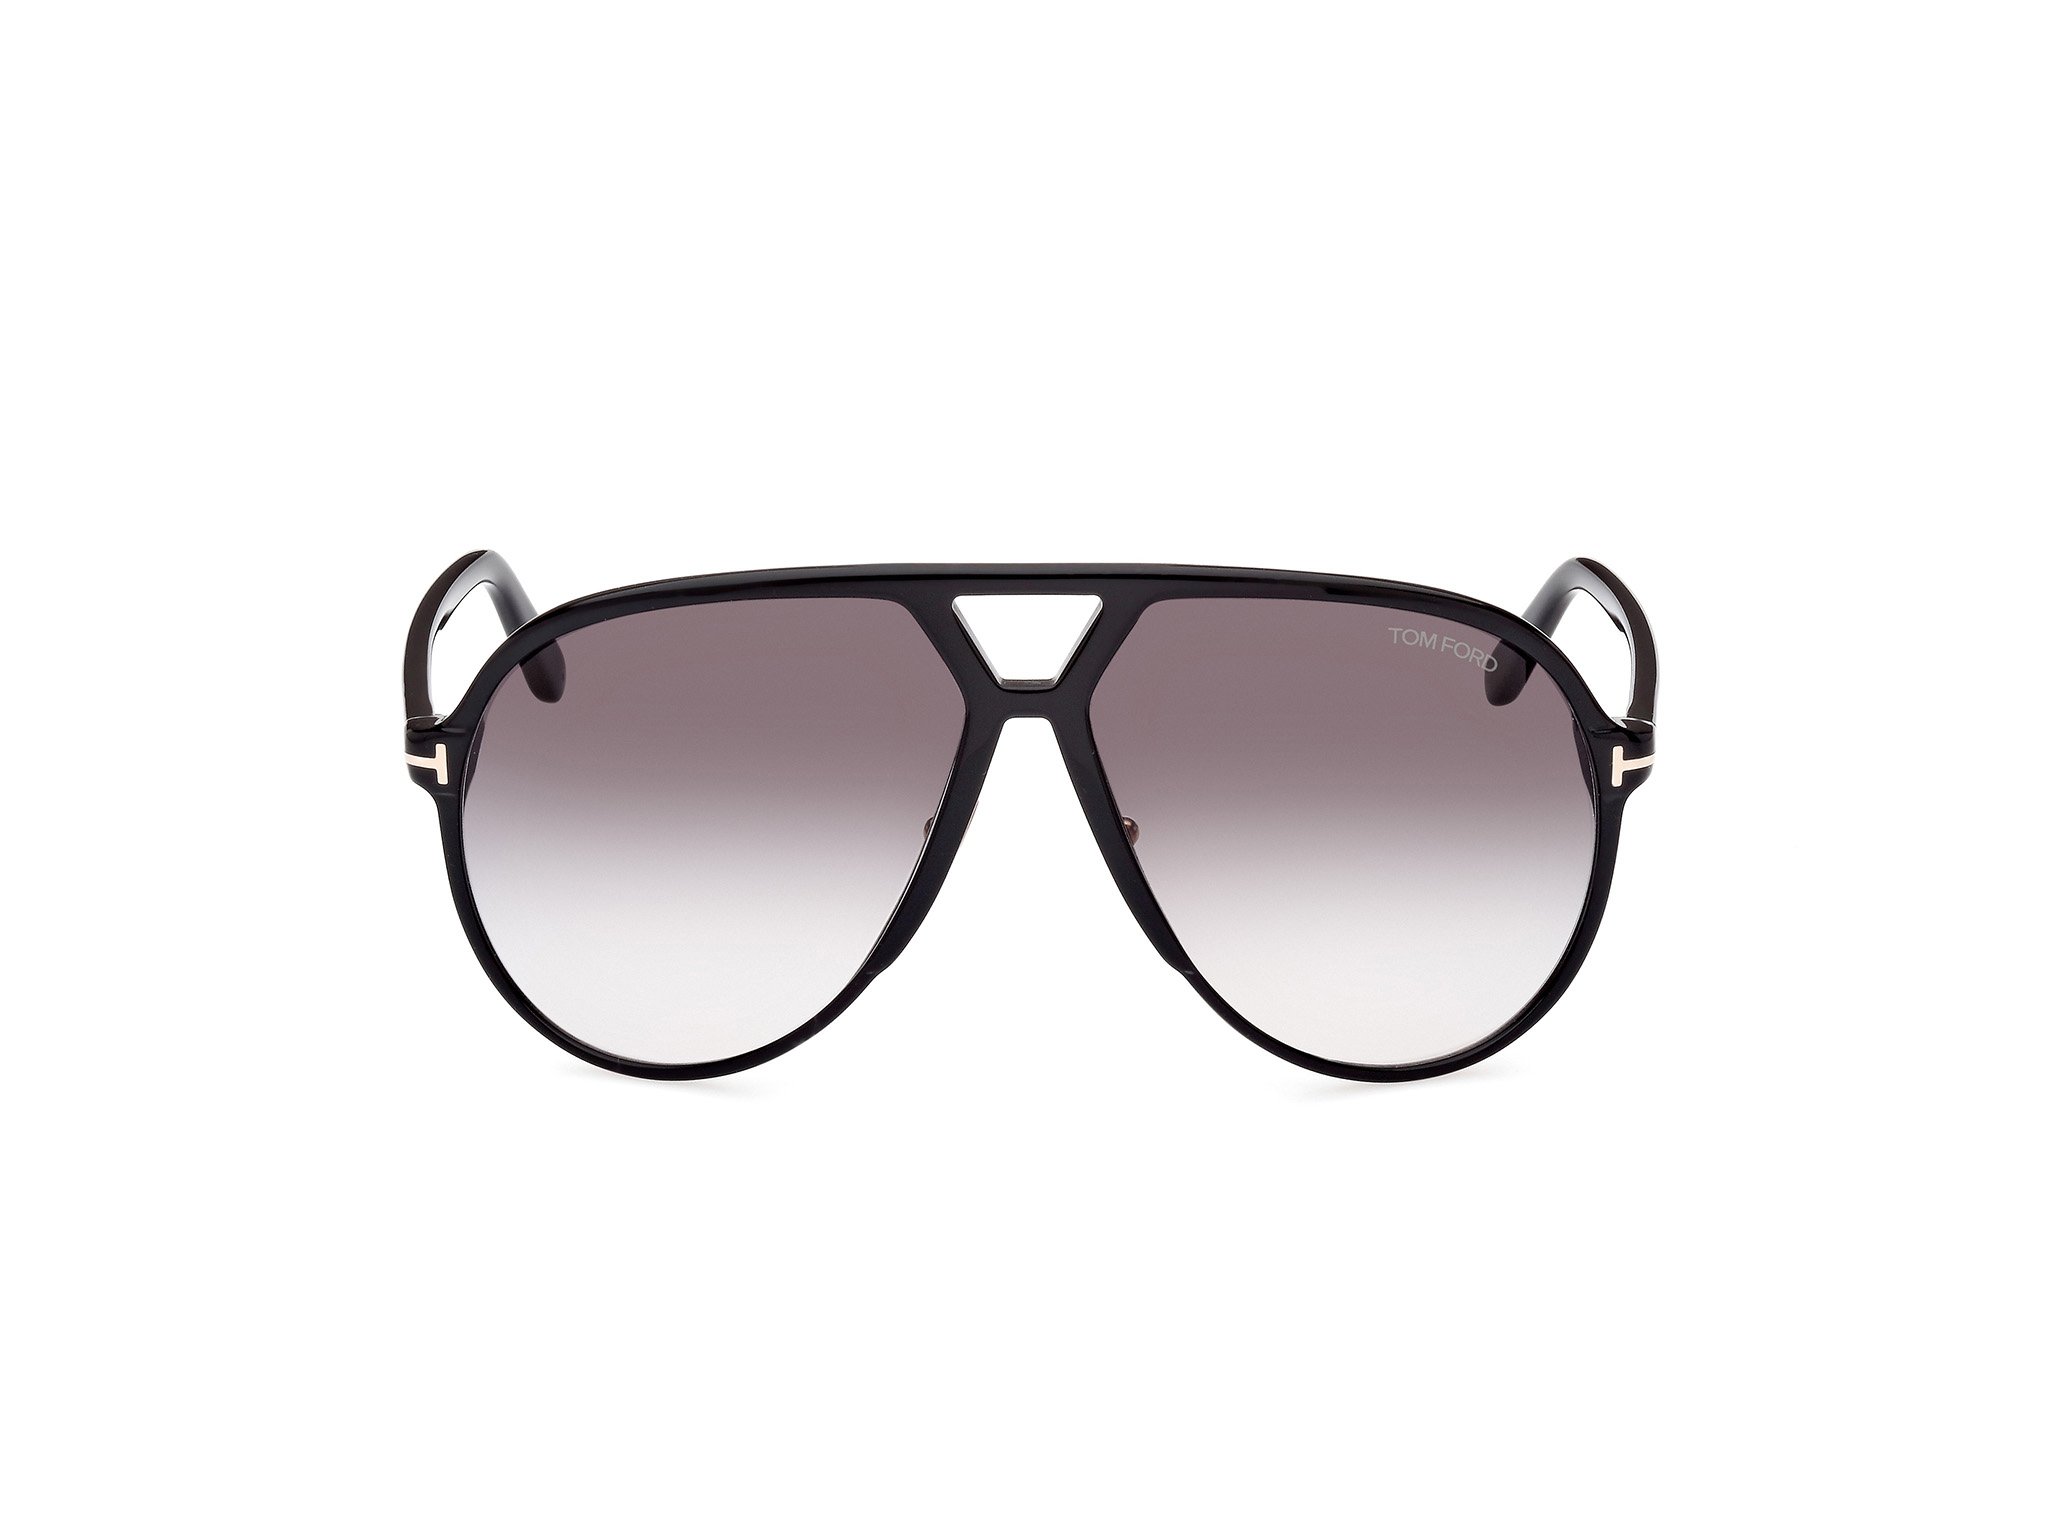  Tom Ford Sonnenbrille Bertrand in schwarz FT1061 01B